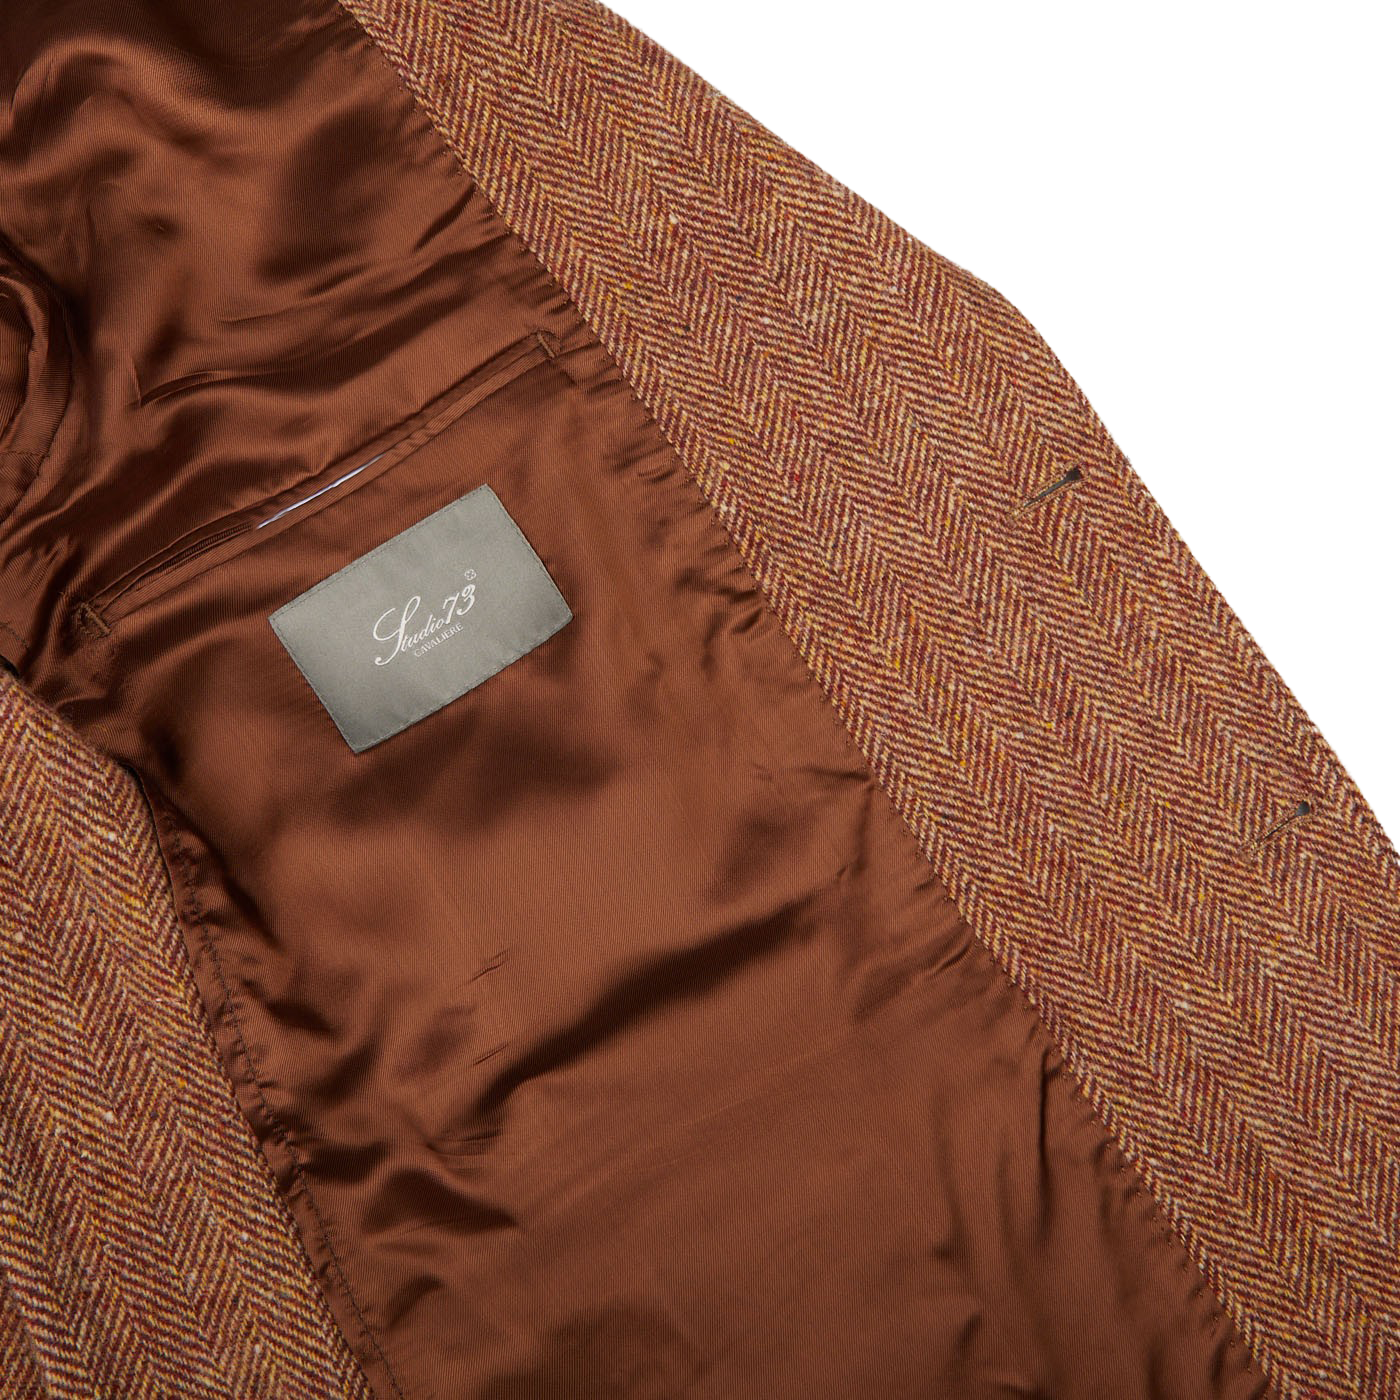 A Studio 73 Orange Herringbone Wool Tweed Blazer with a label on it.